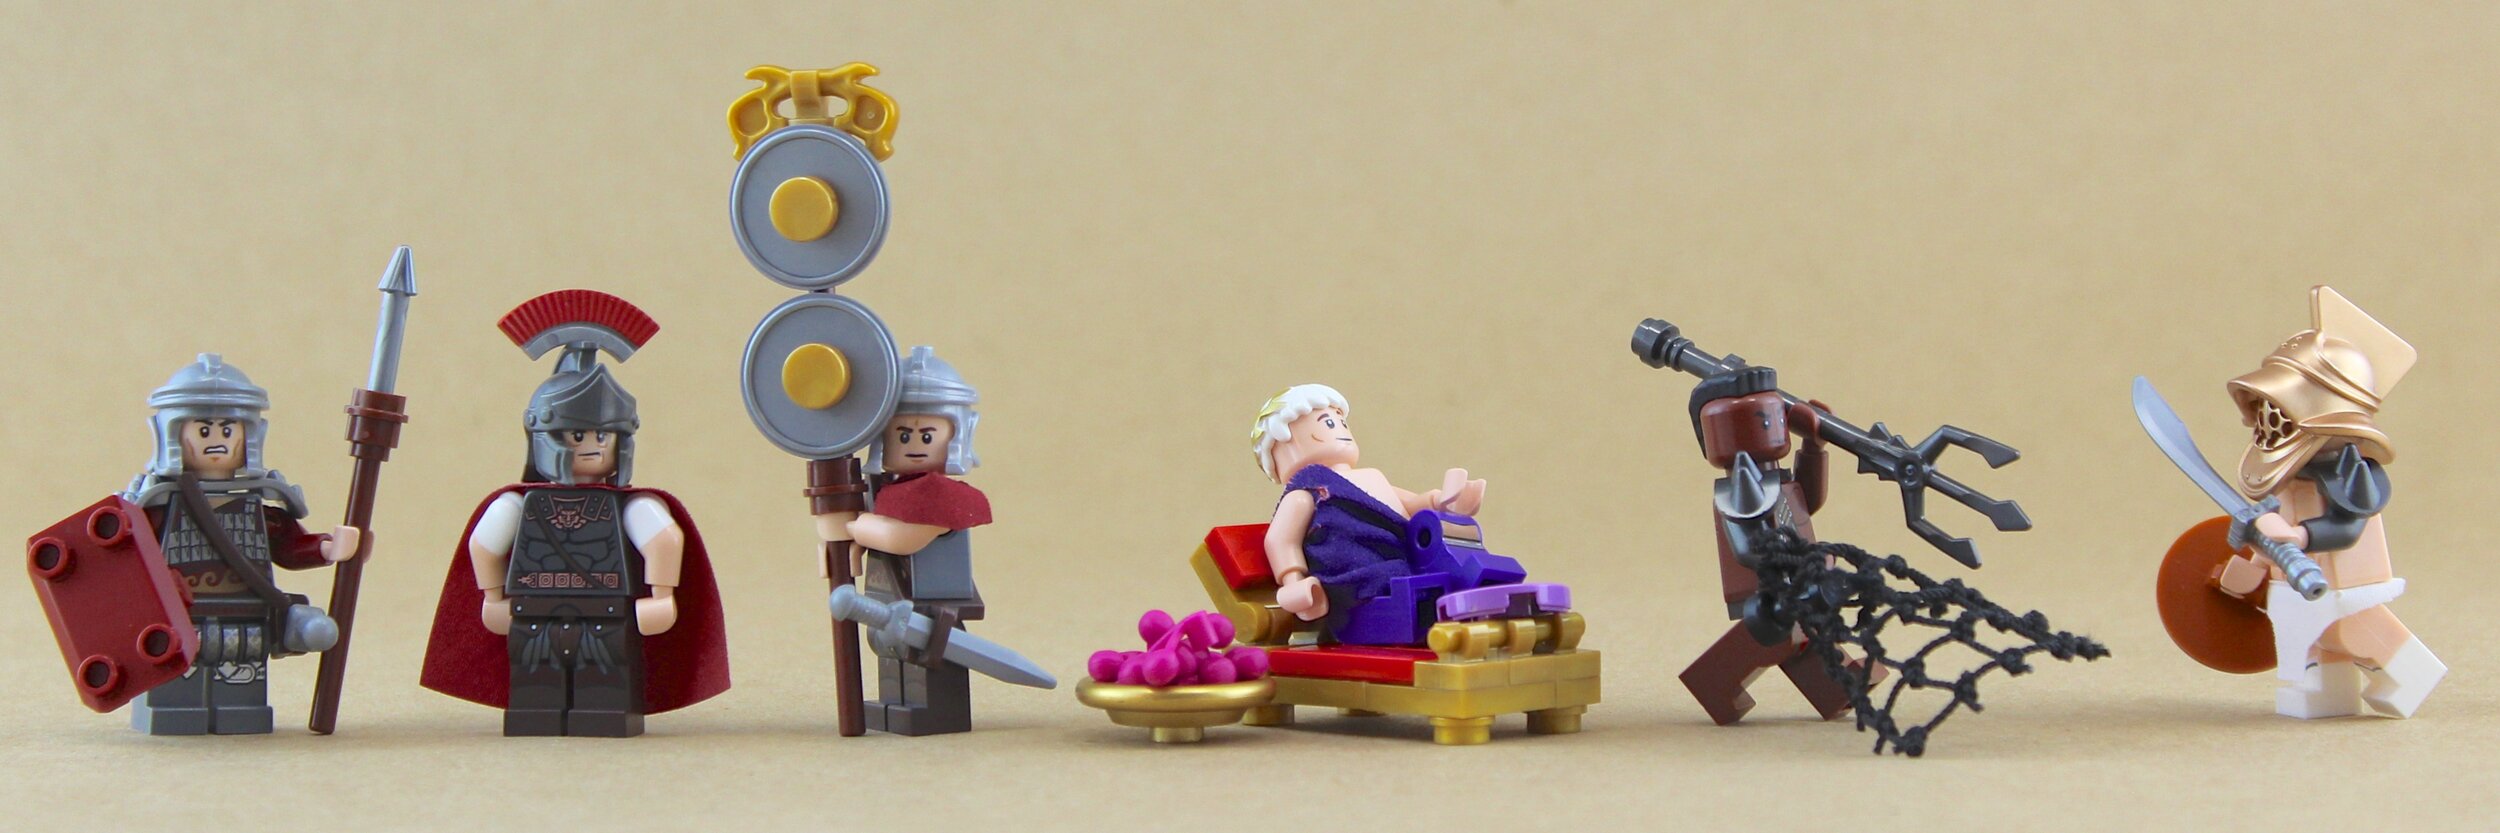 Custom MUSCLED CUIRASS Armor for Lego Minifigures Mythology Pick Your Color!